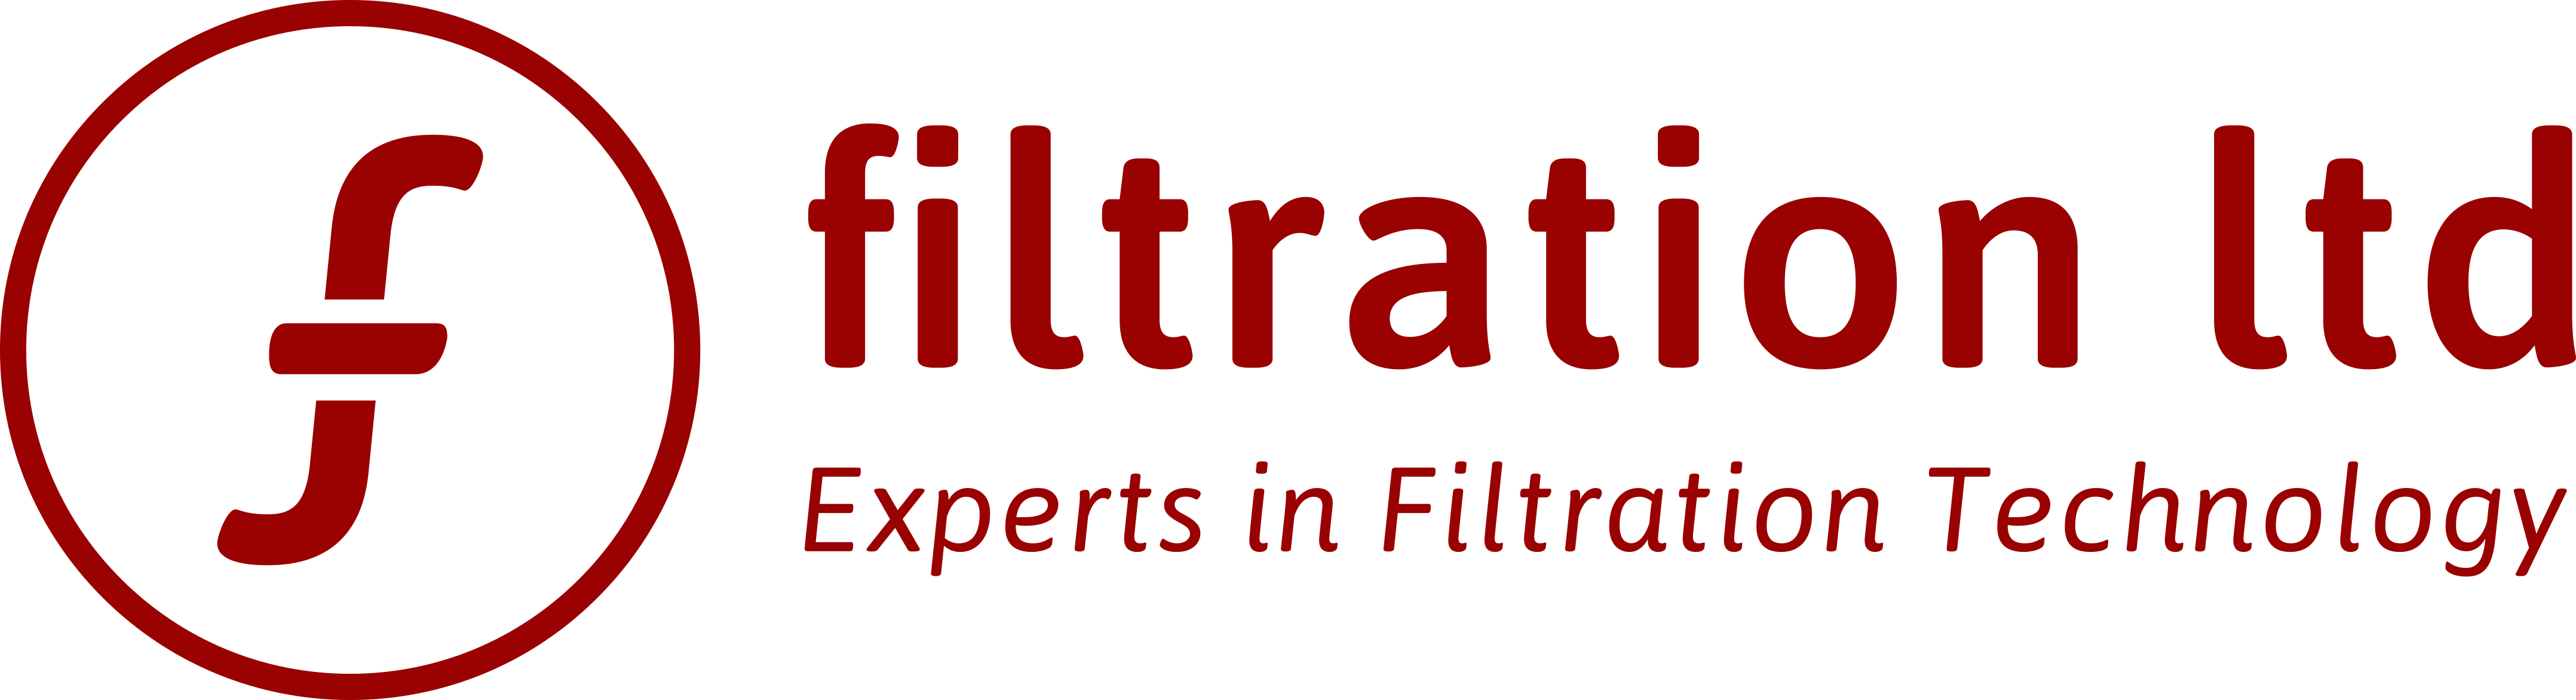 Filtration Ltd